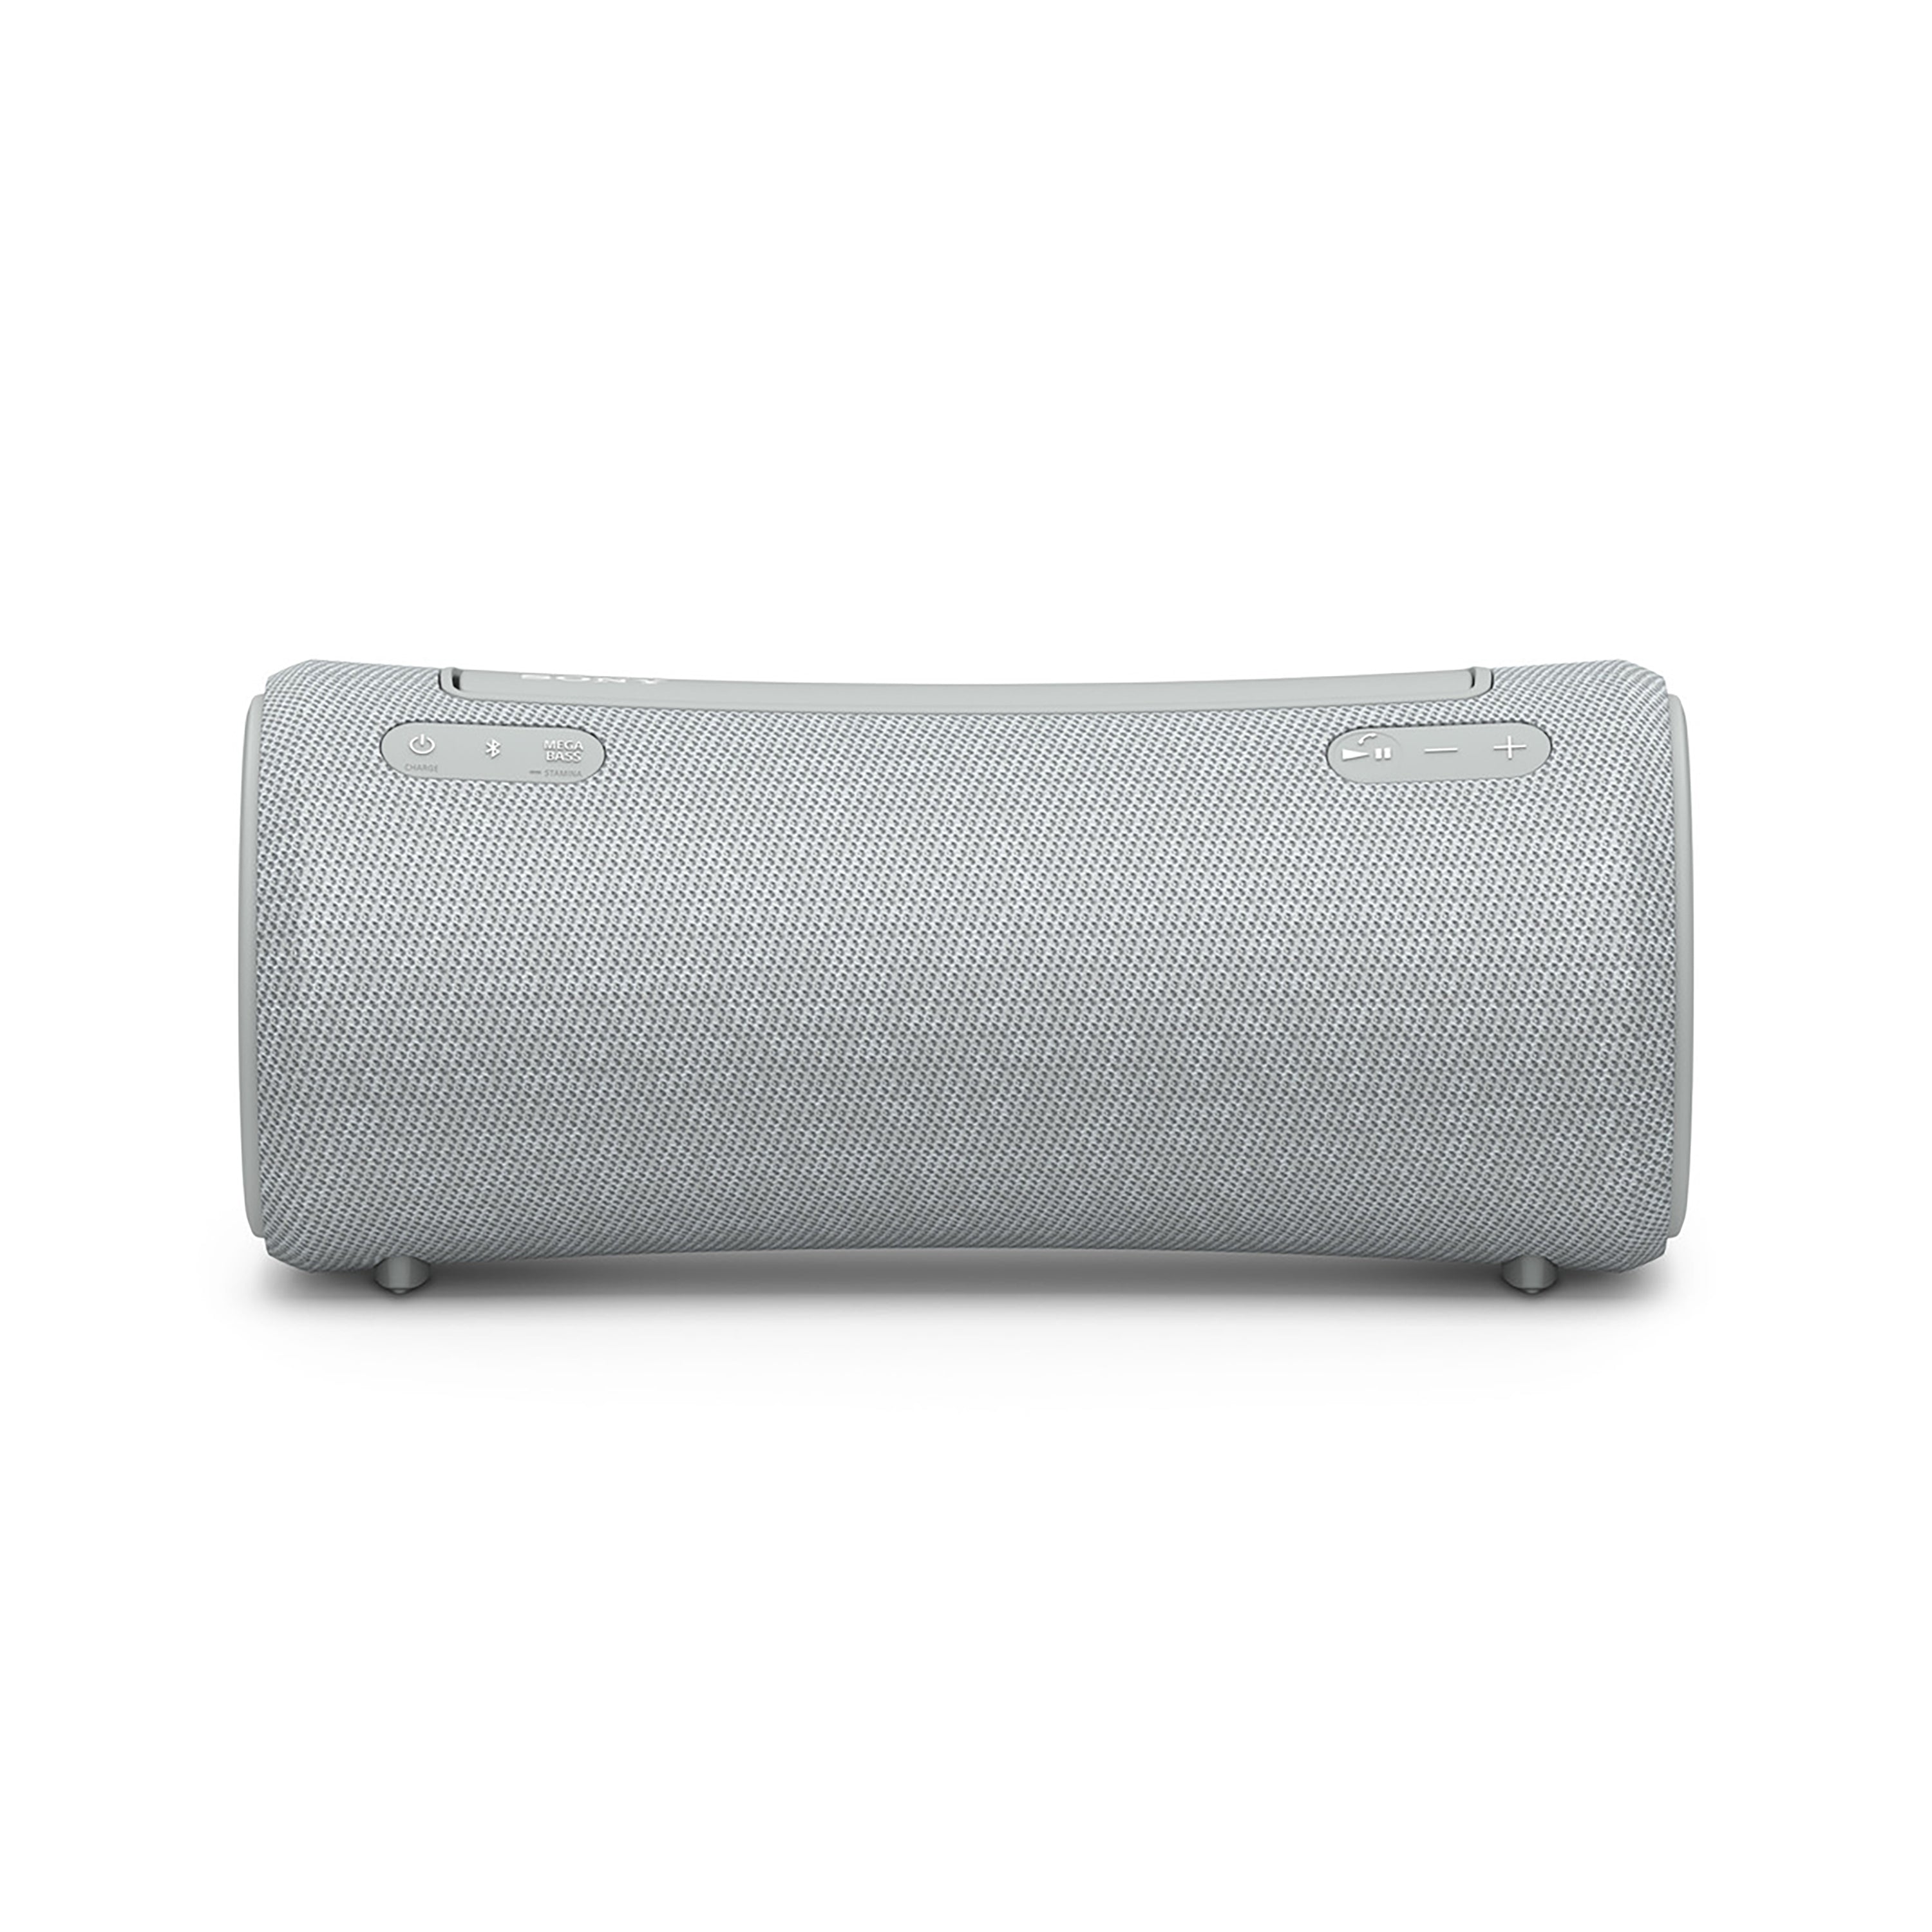 SRS-XG300 Portable BLUETOOTH® Speaker